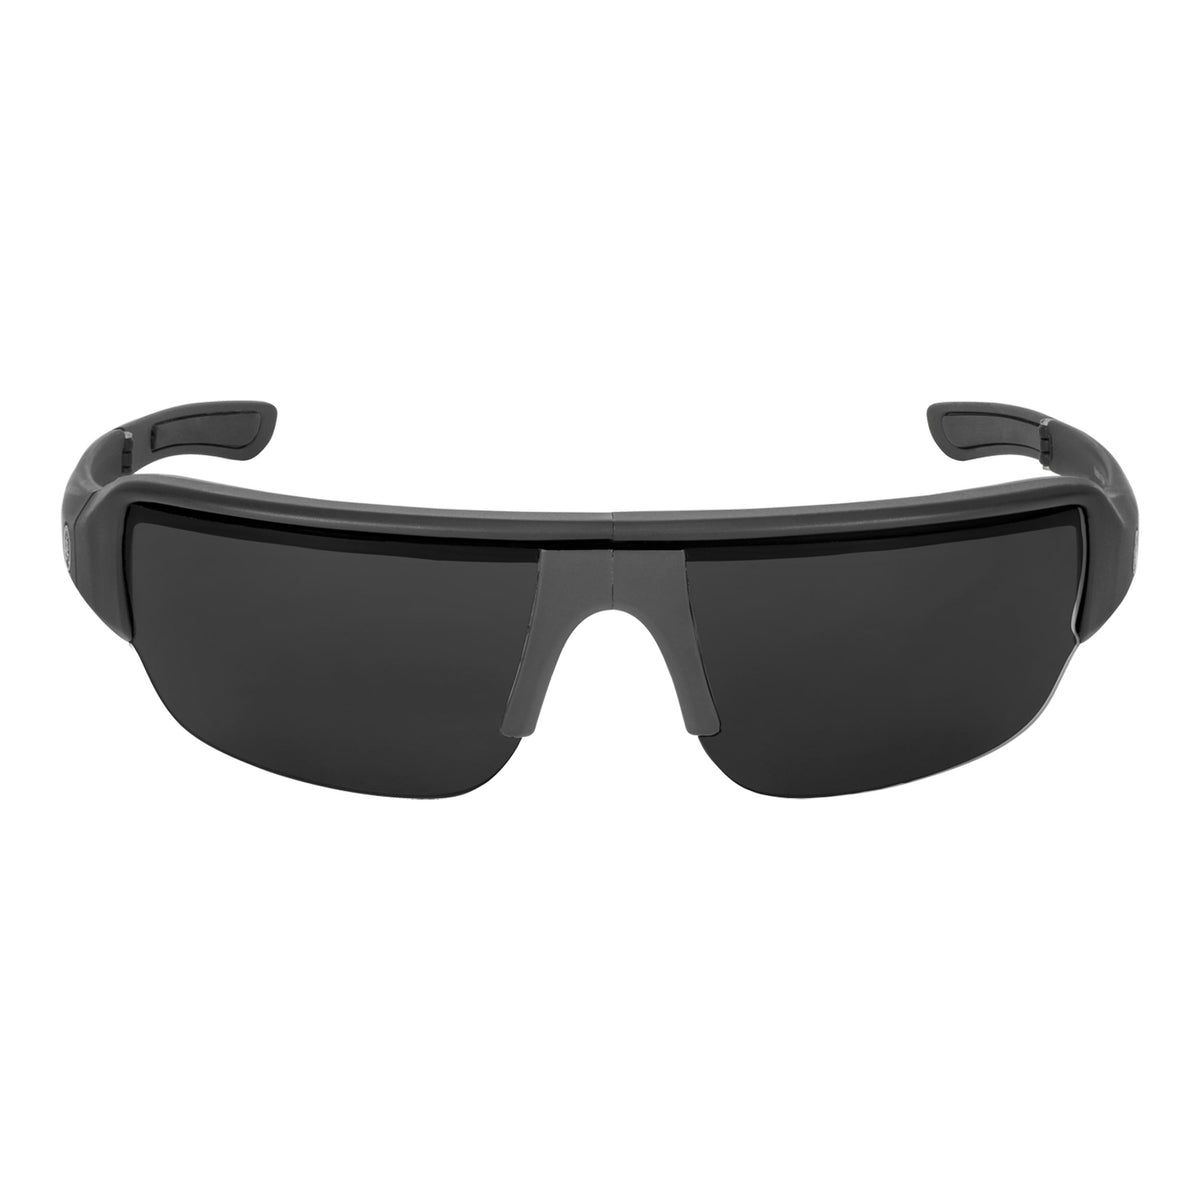 Popticals, Premium Compact Sunglasses, PopGun, 010010-BMGP, Polarized Sunglasses, Matte Black Frame, Gray Lenses, Front View